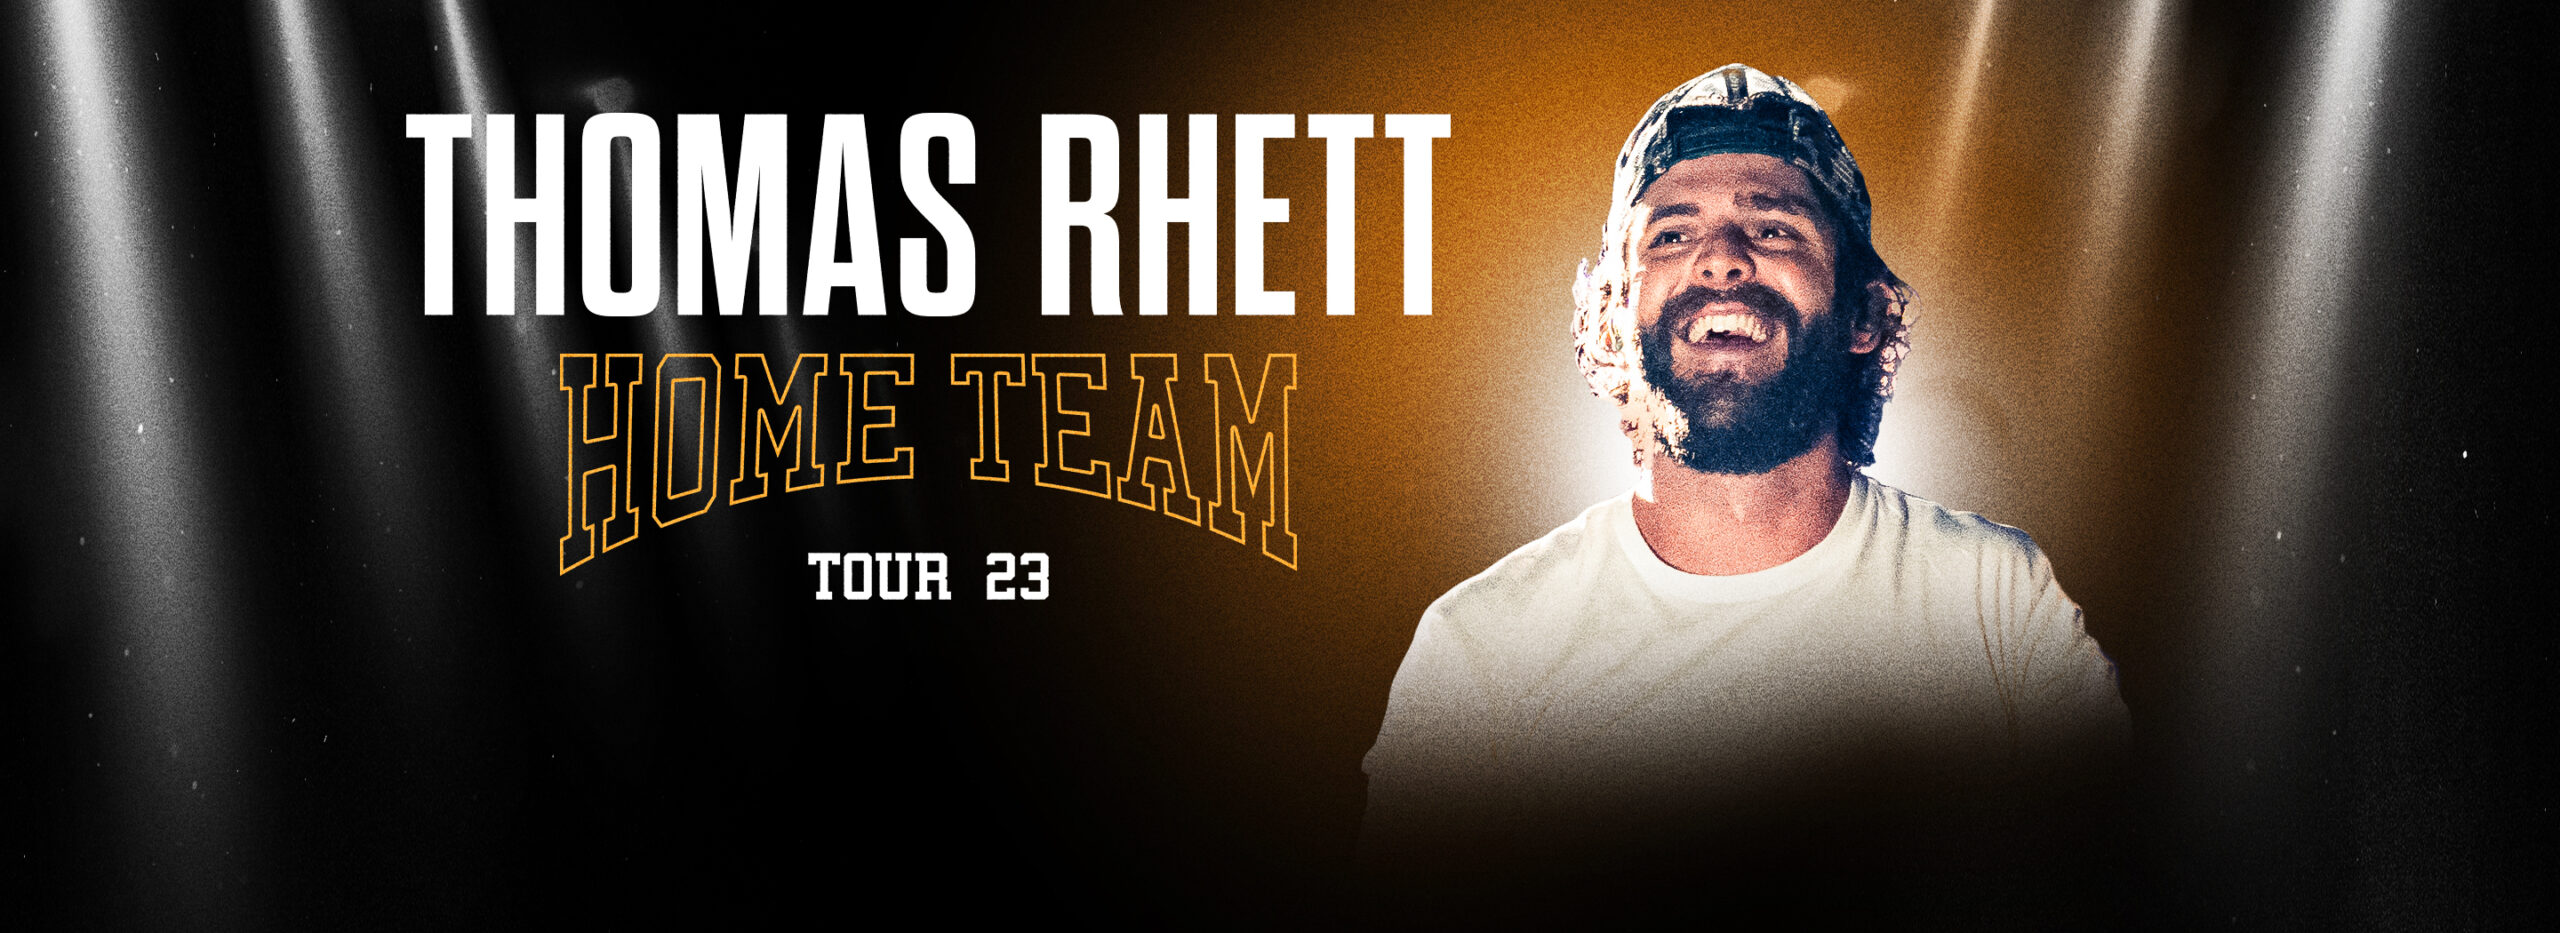 Event Feedback: Thomas Rhett: Home Team Tour 23